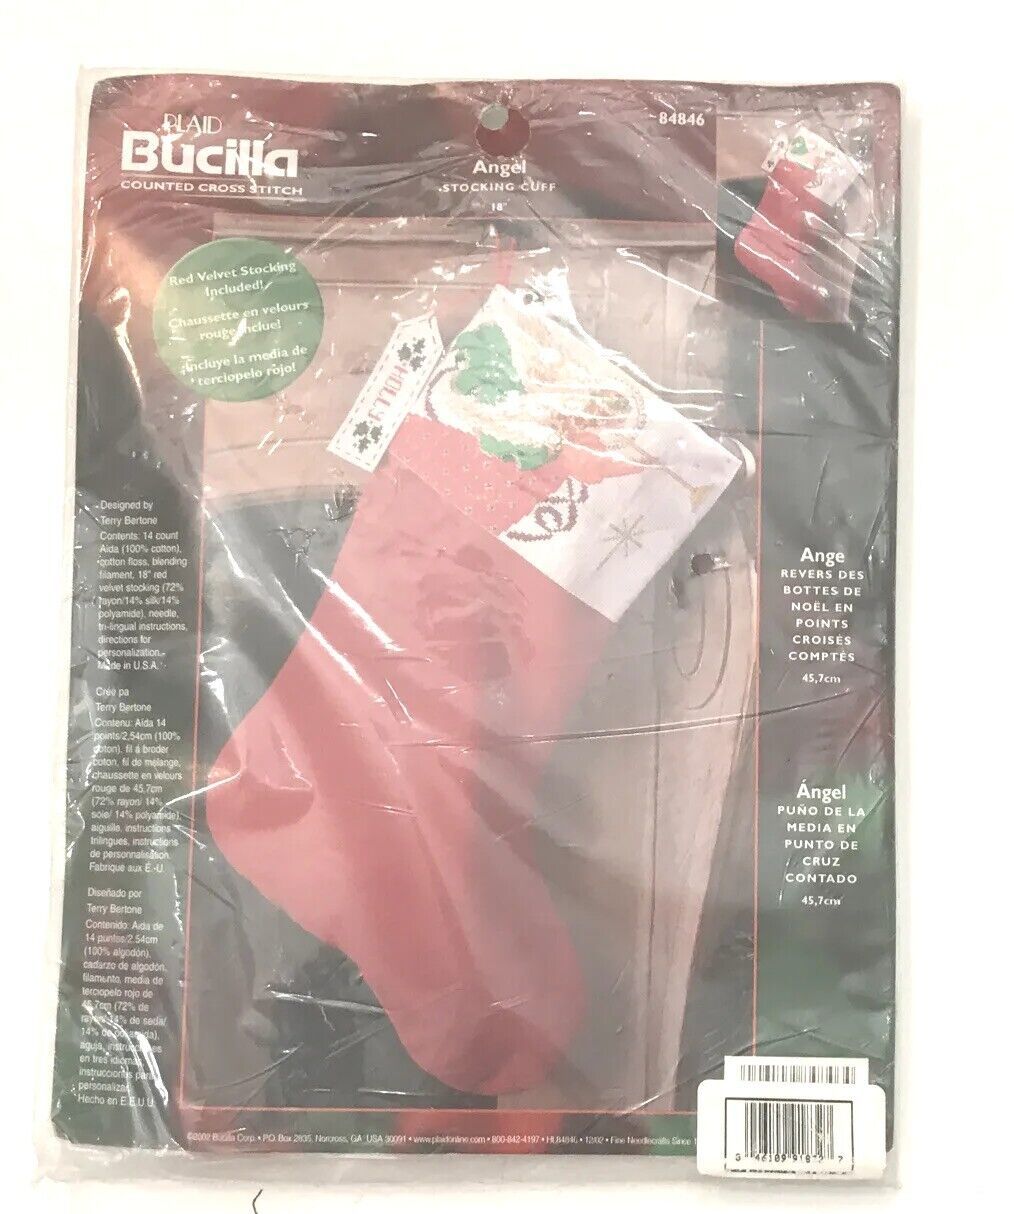 Plaid Bucilla Counted Cross Stitch Angel Stocking Cuff Kit 2002 18 Inches 84846 - $24.43